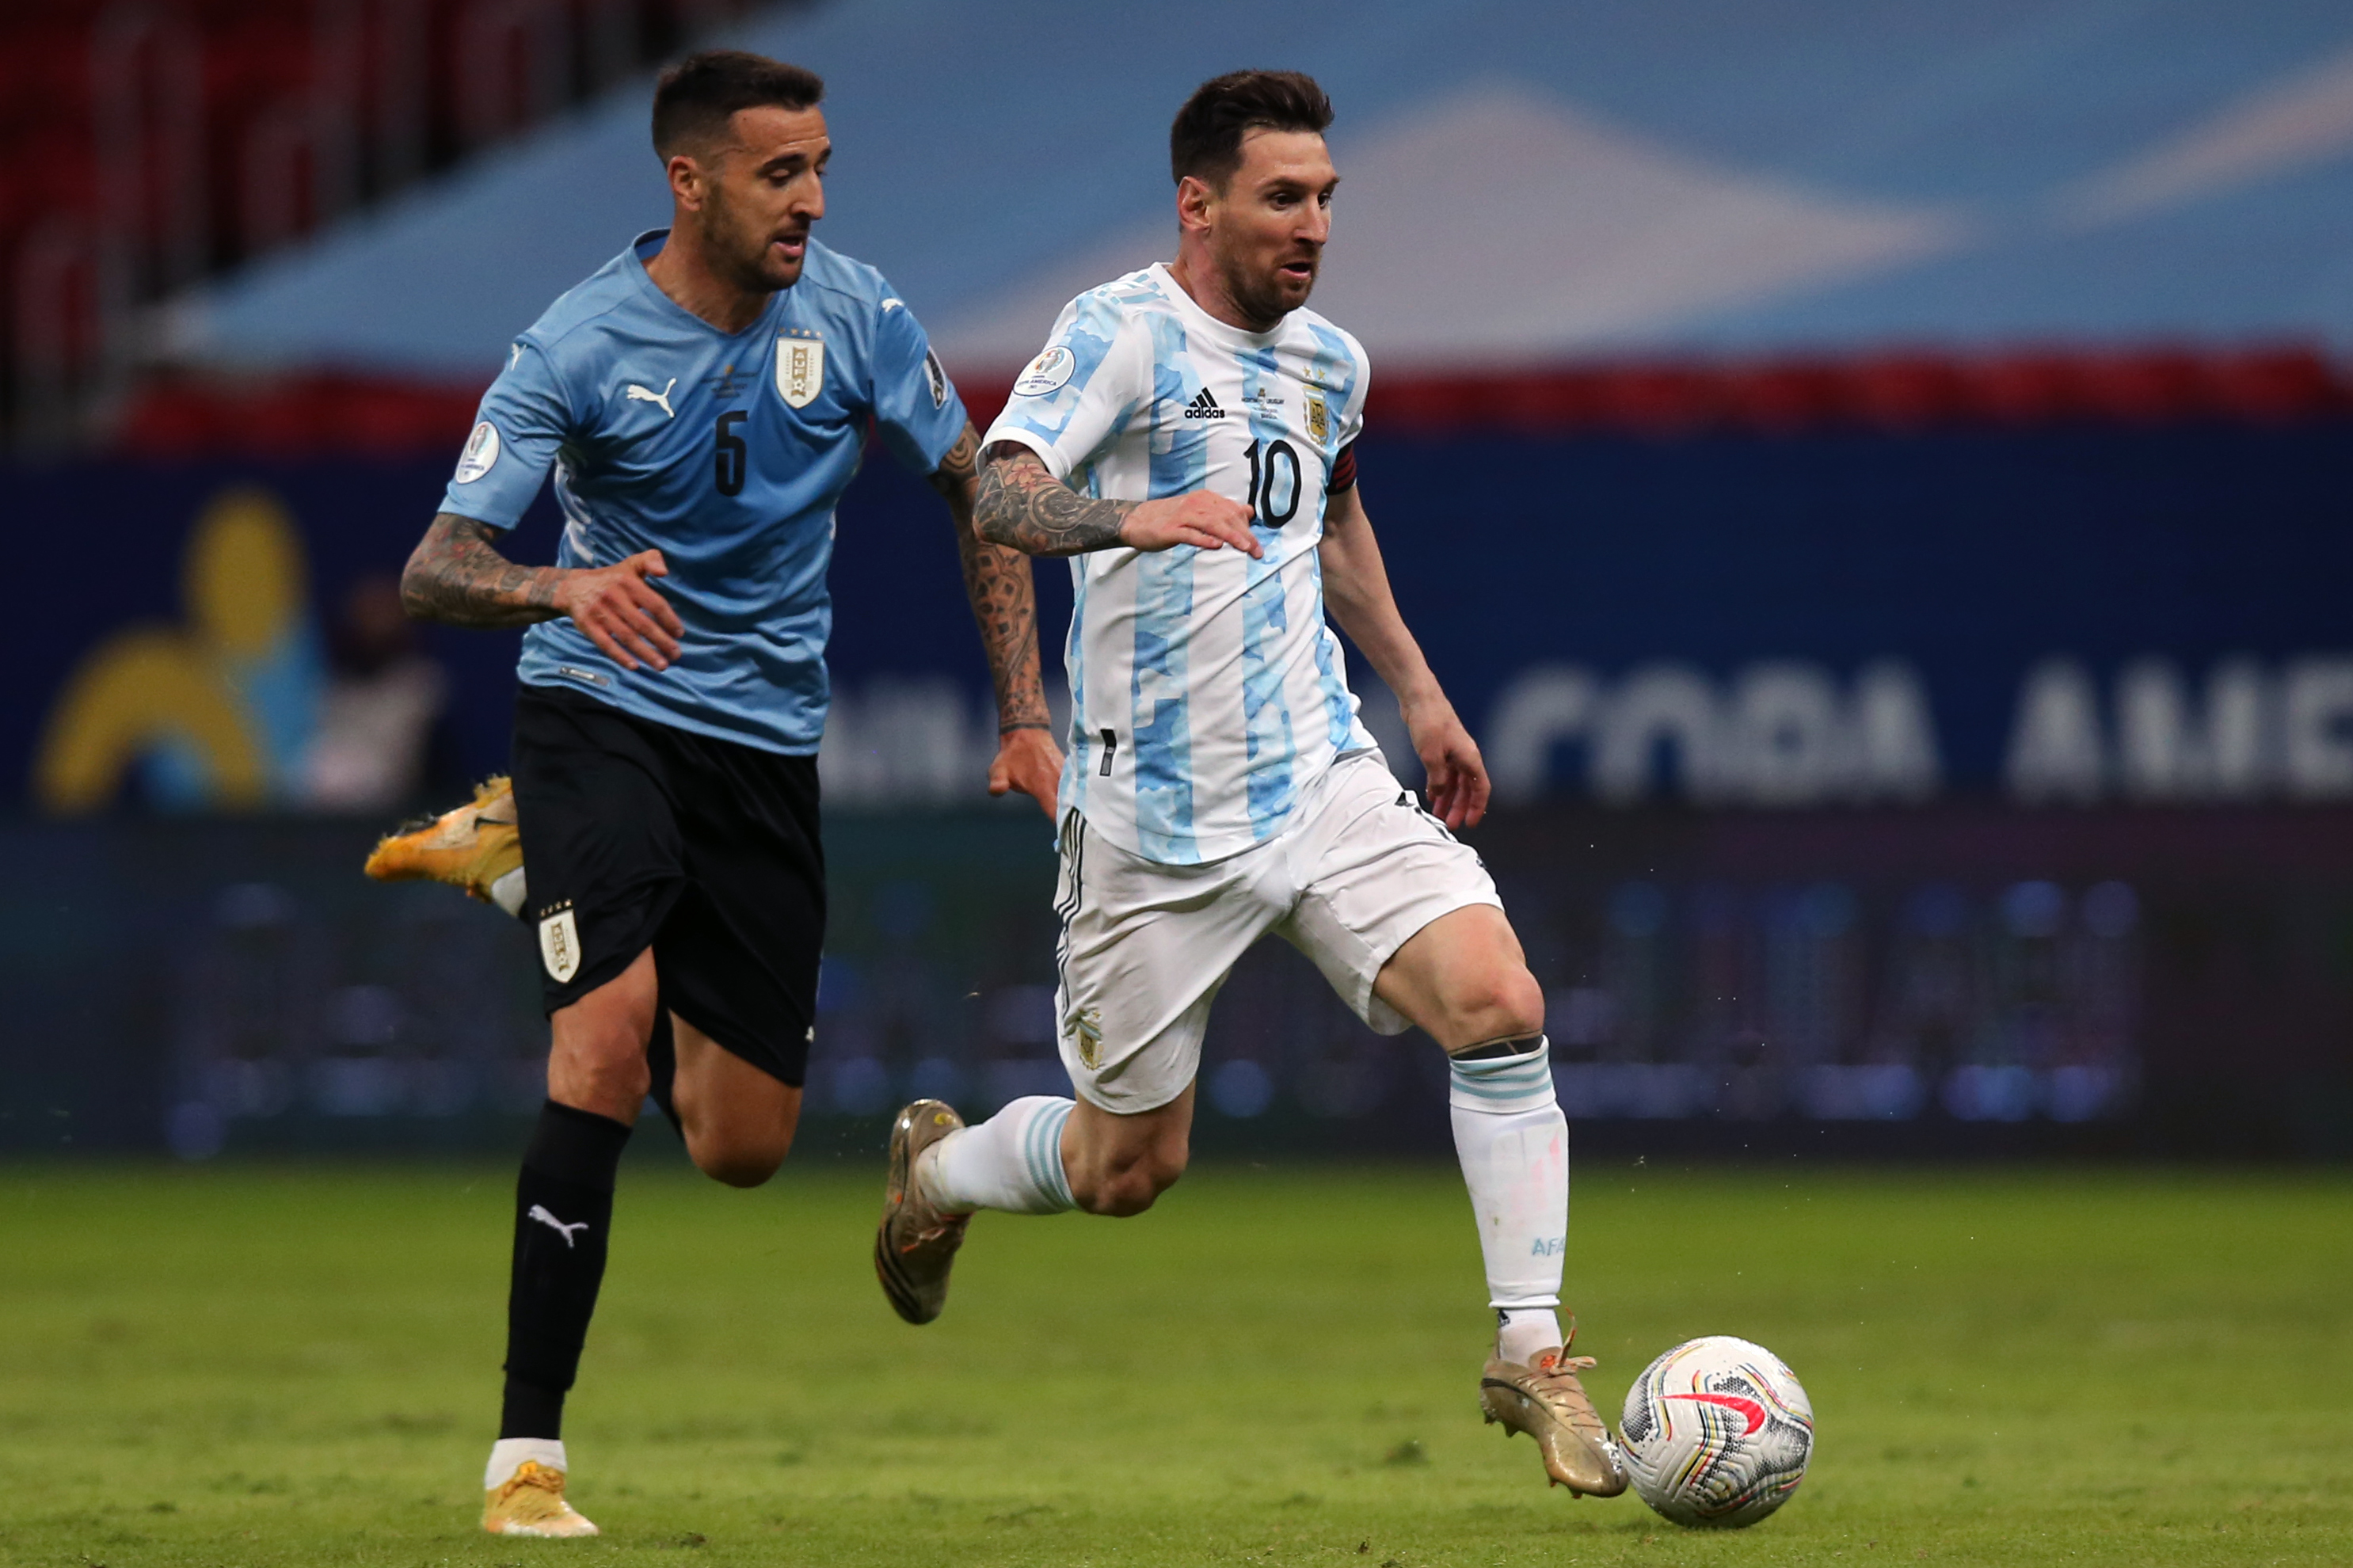 Watch: Lionel Messi’s sublime assist against Uruguay